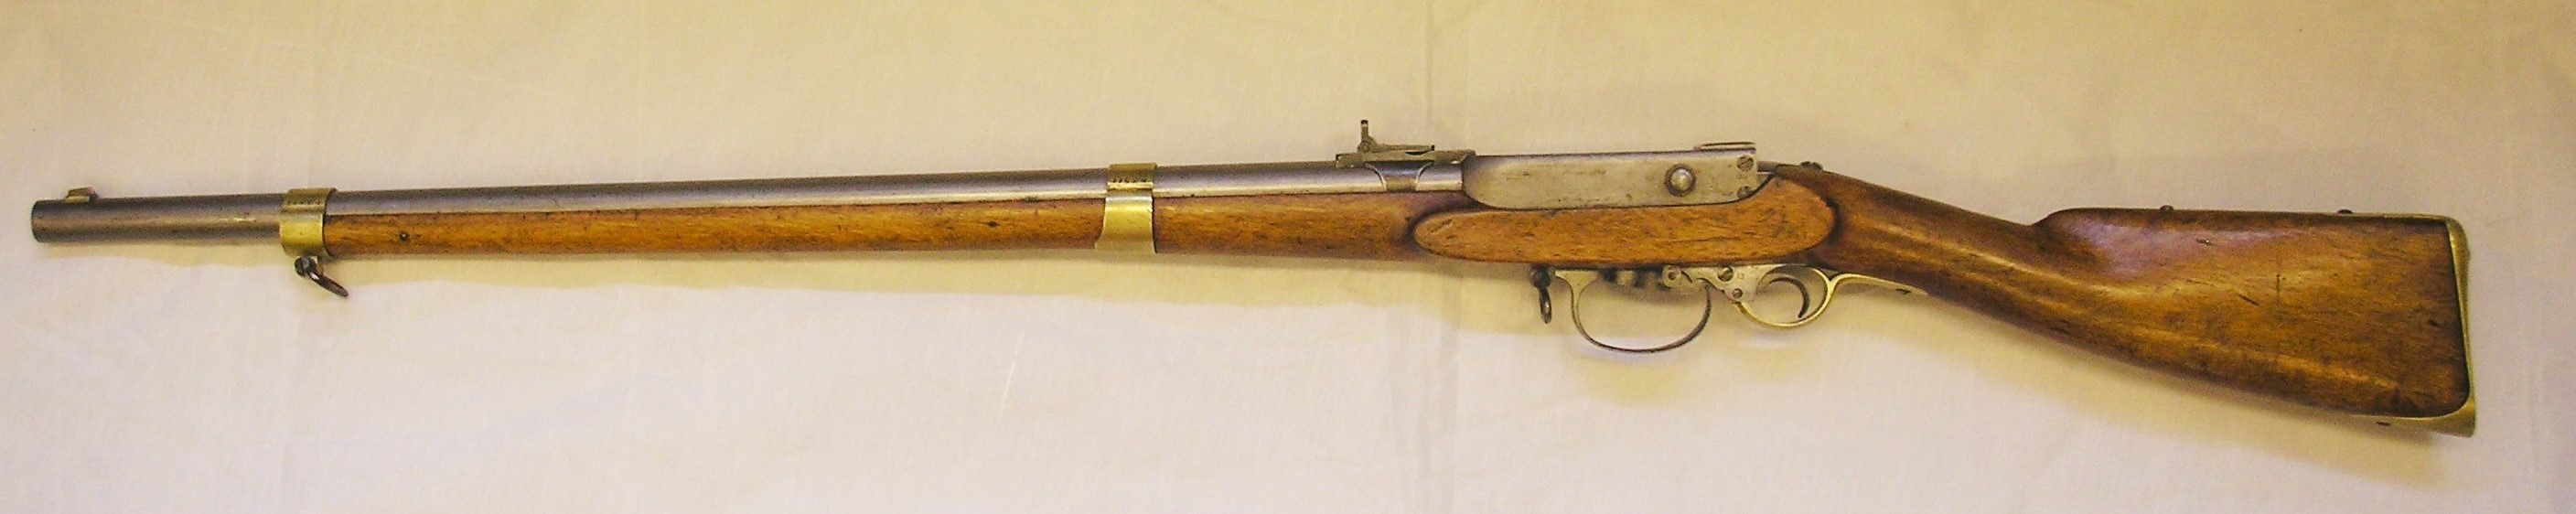 ./guns/rifle/bilder/Rifle-Kongsberg-Kammerlader-M1859-11824-2.JPG